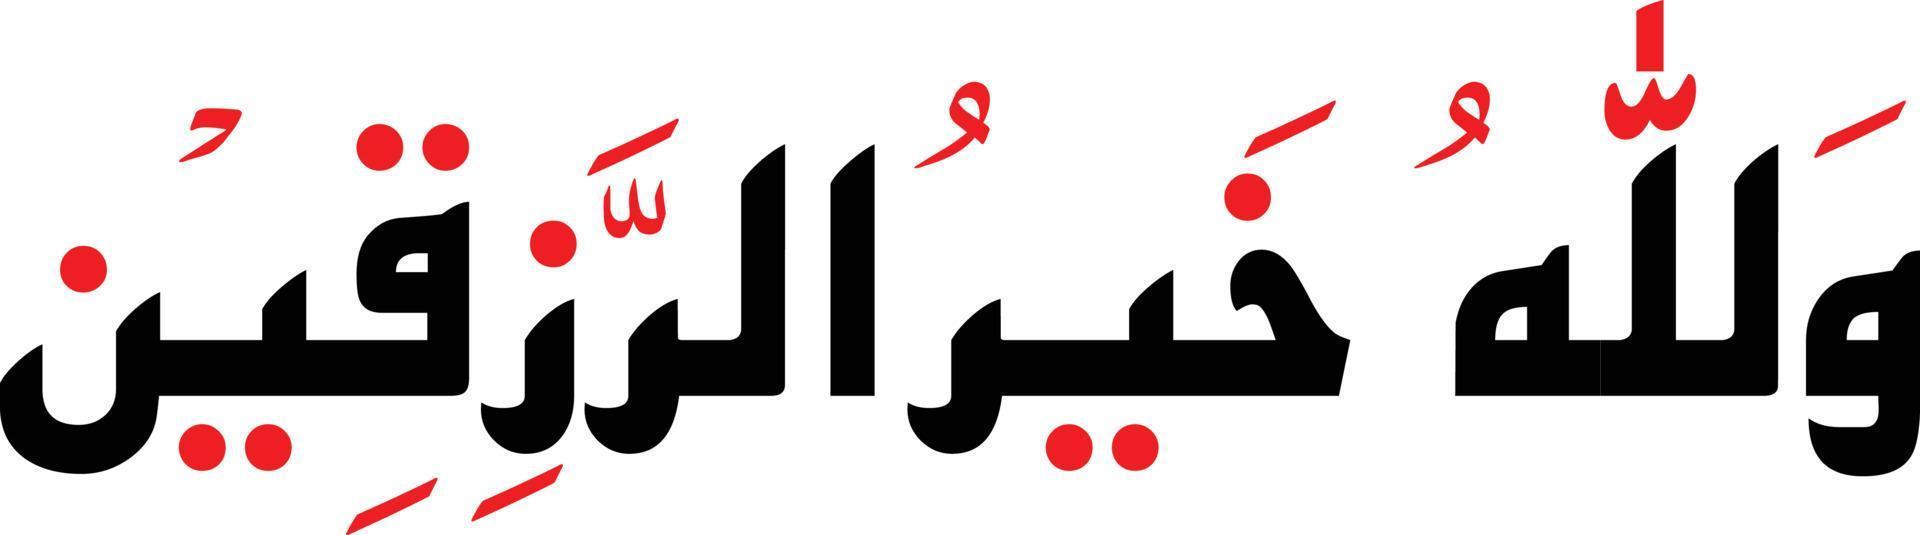 walahu khair ur raziqin, png afbeelding, wallahu khair ur raziqeen arbic kalligrafie, walahu khairur raziqeen Arabisch schoonschrift png, vector